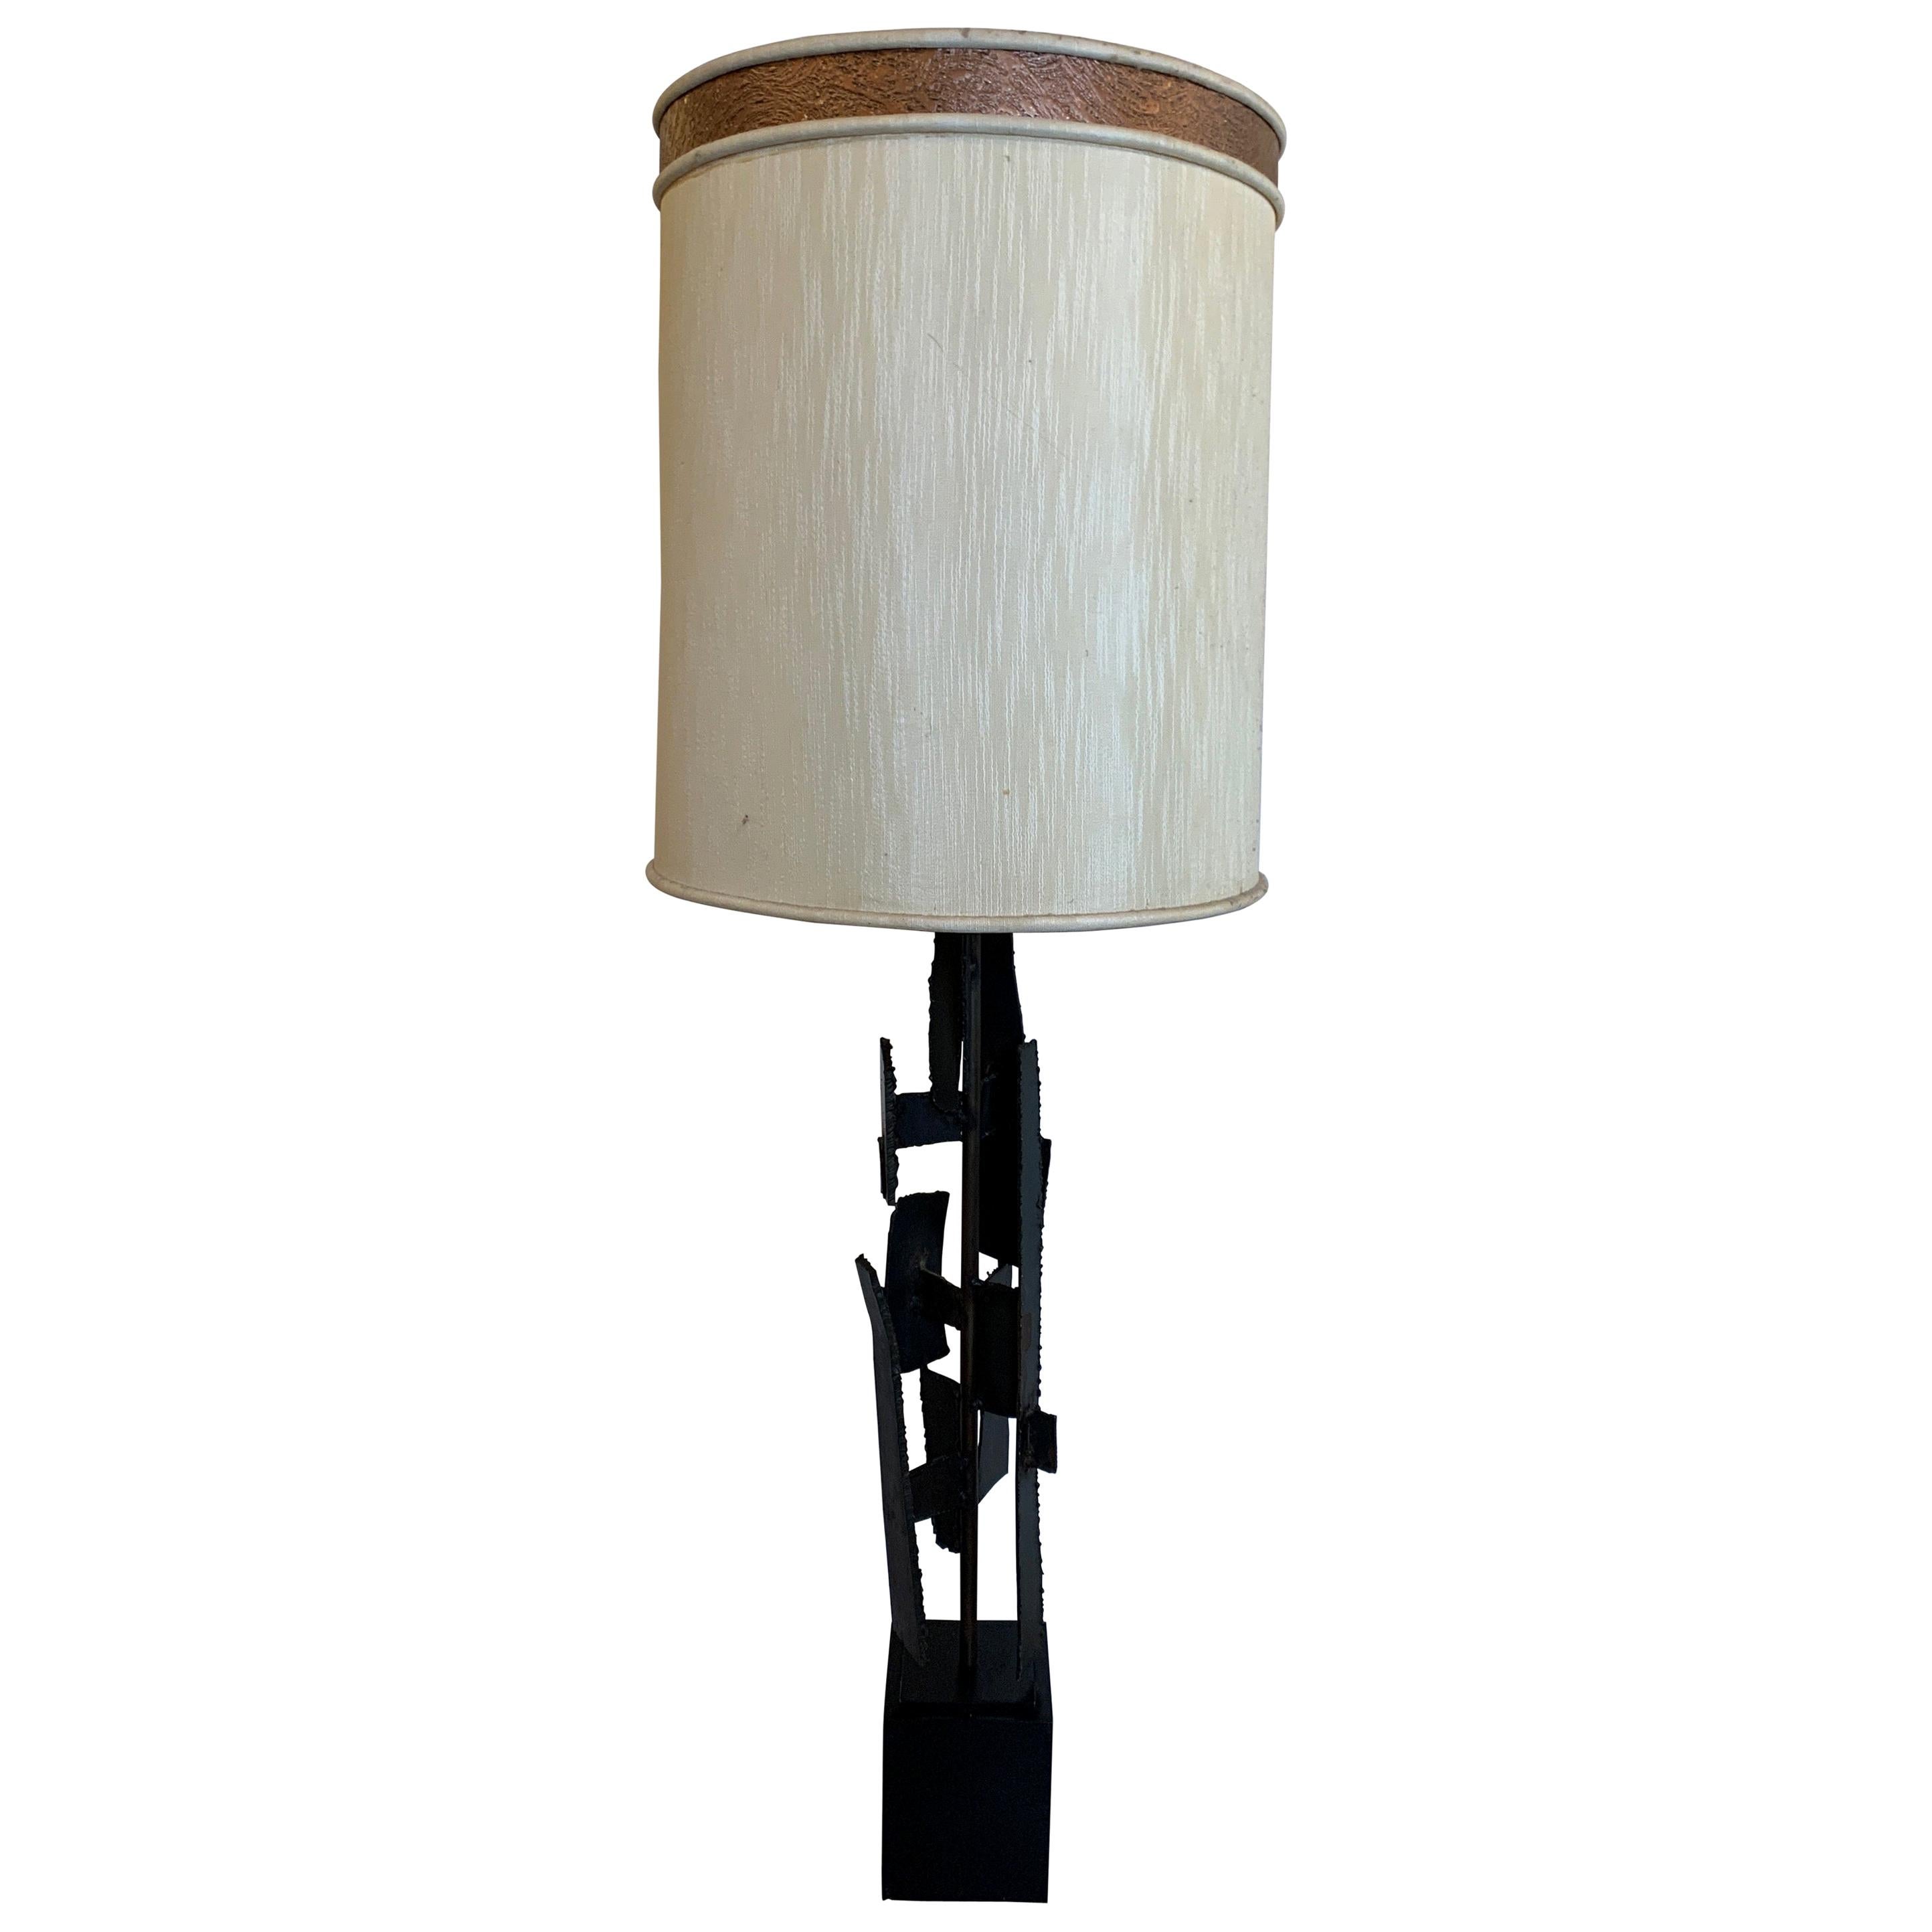 Harry Balmer for Laurel Lamp Co. Brutalist Table Lamp